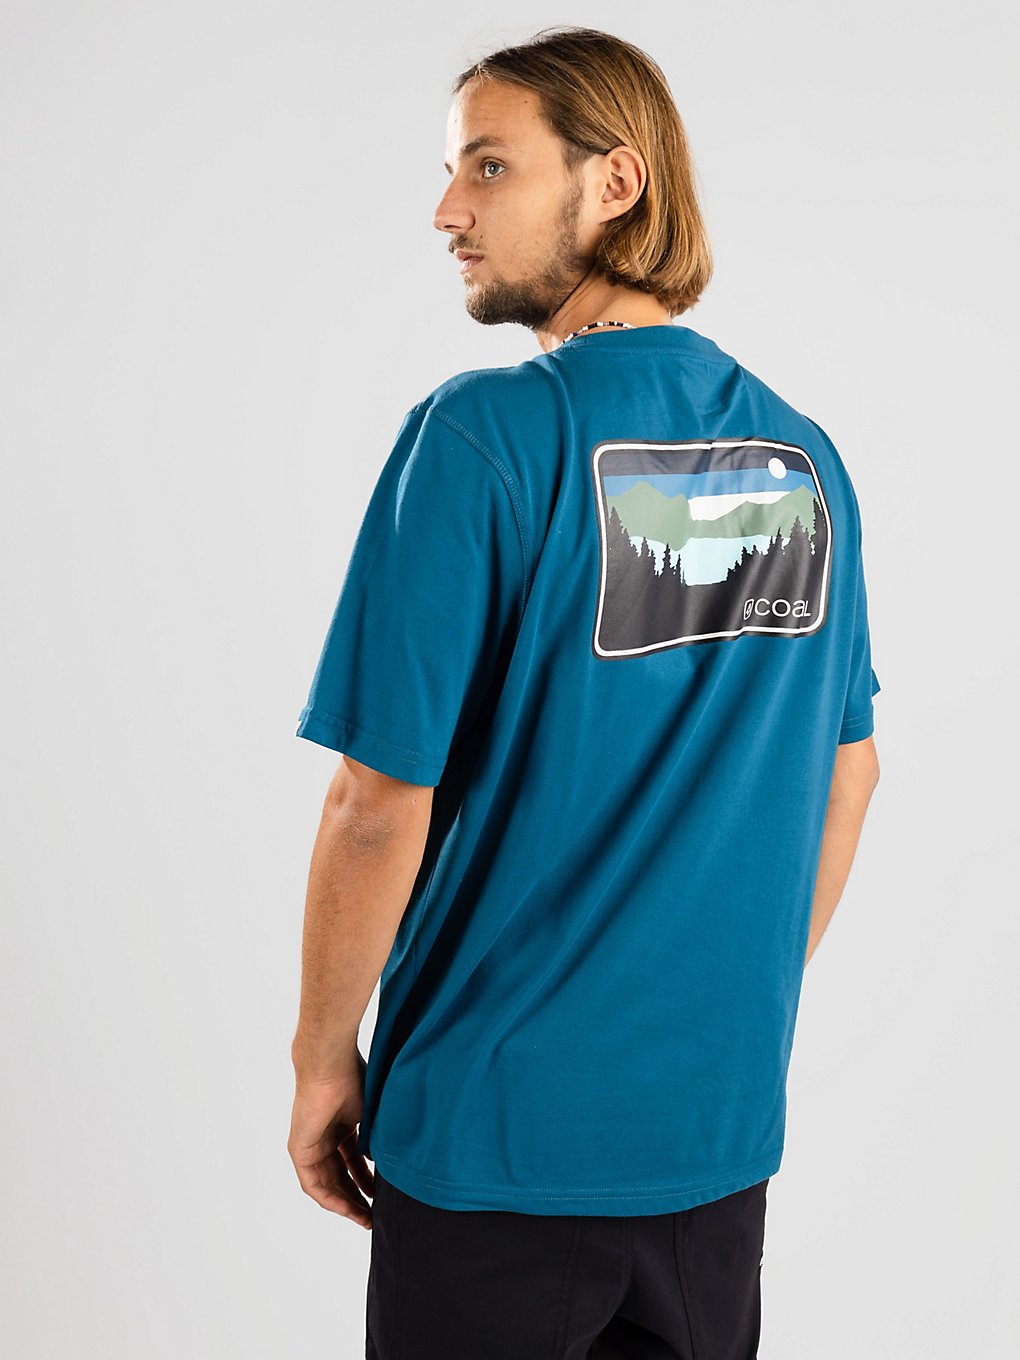 Coal Klamath T-Shirt lyons blue kaufen